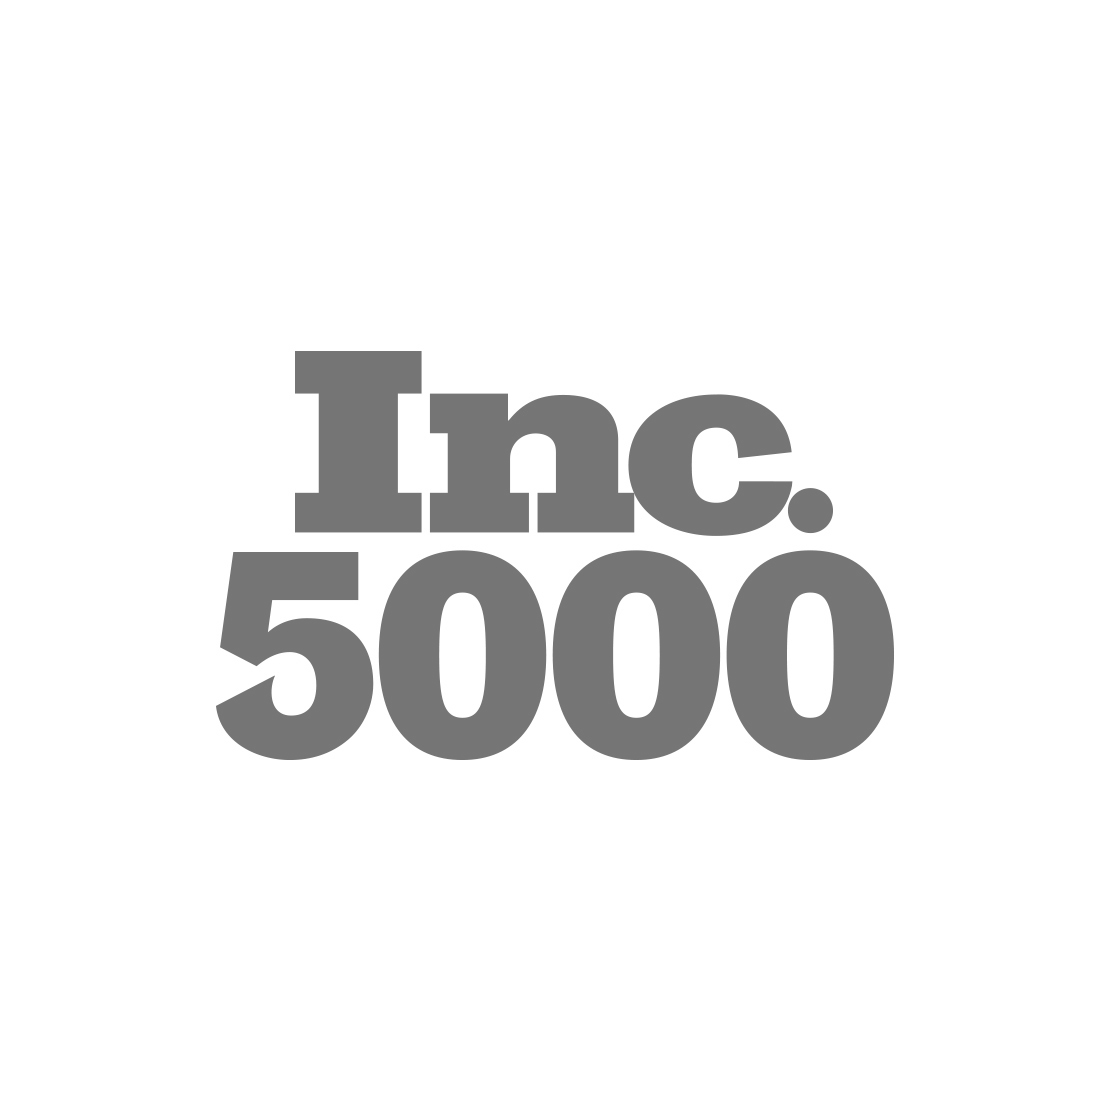 Inc5000 gray logo